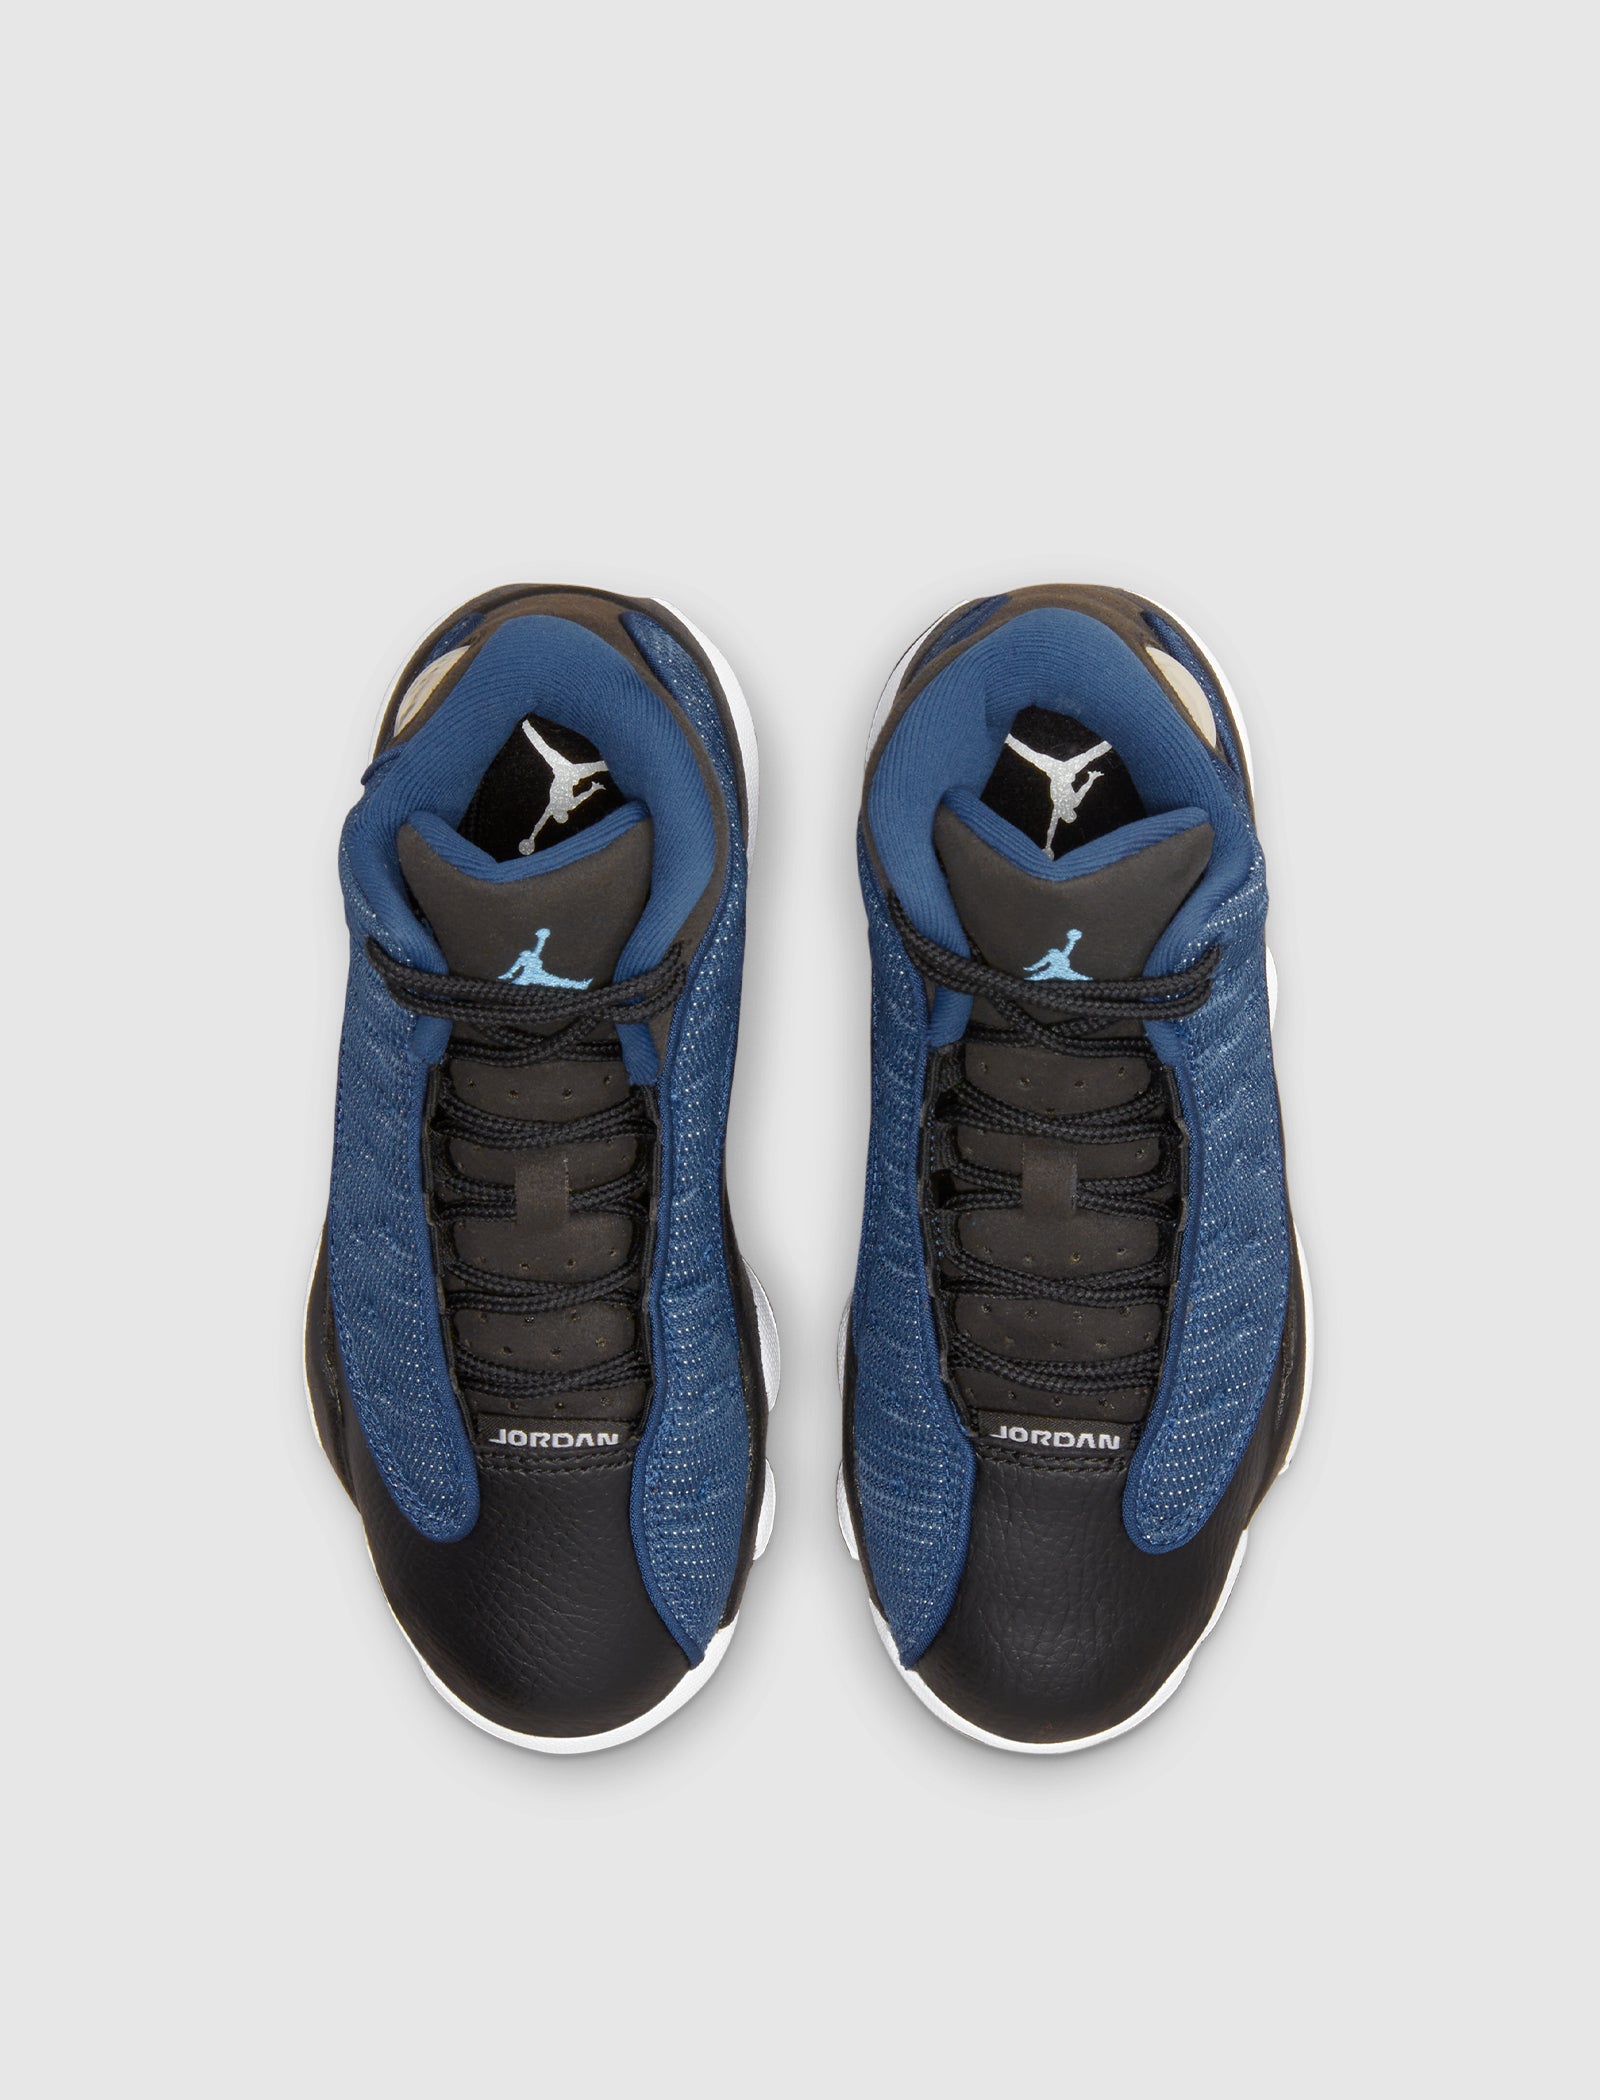 Air Jordan 13 Retro Low 'Black & Brave Blue'. Nike SNKRS